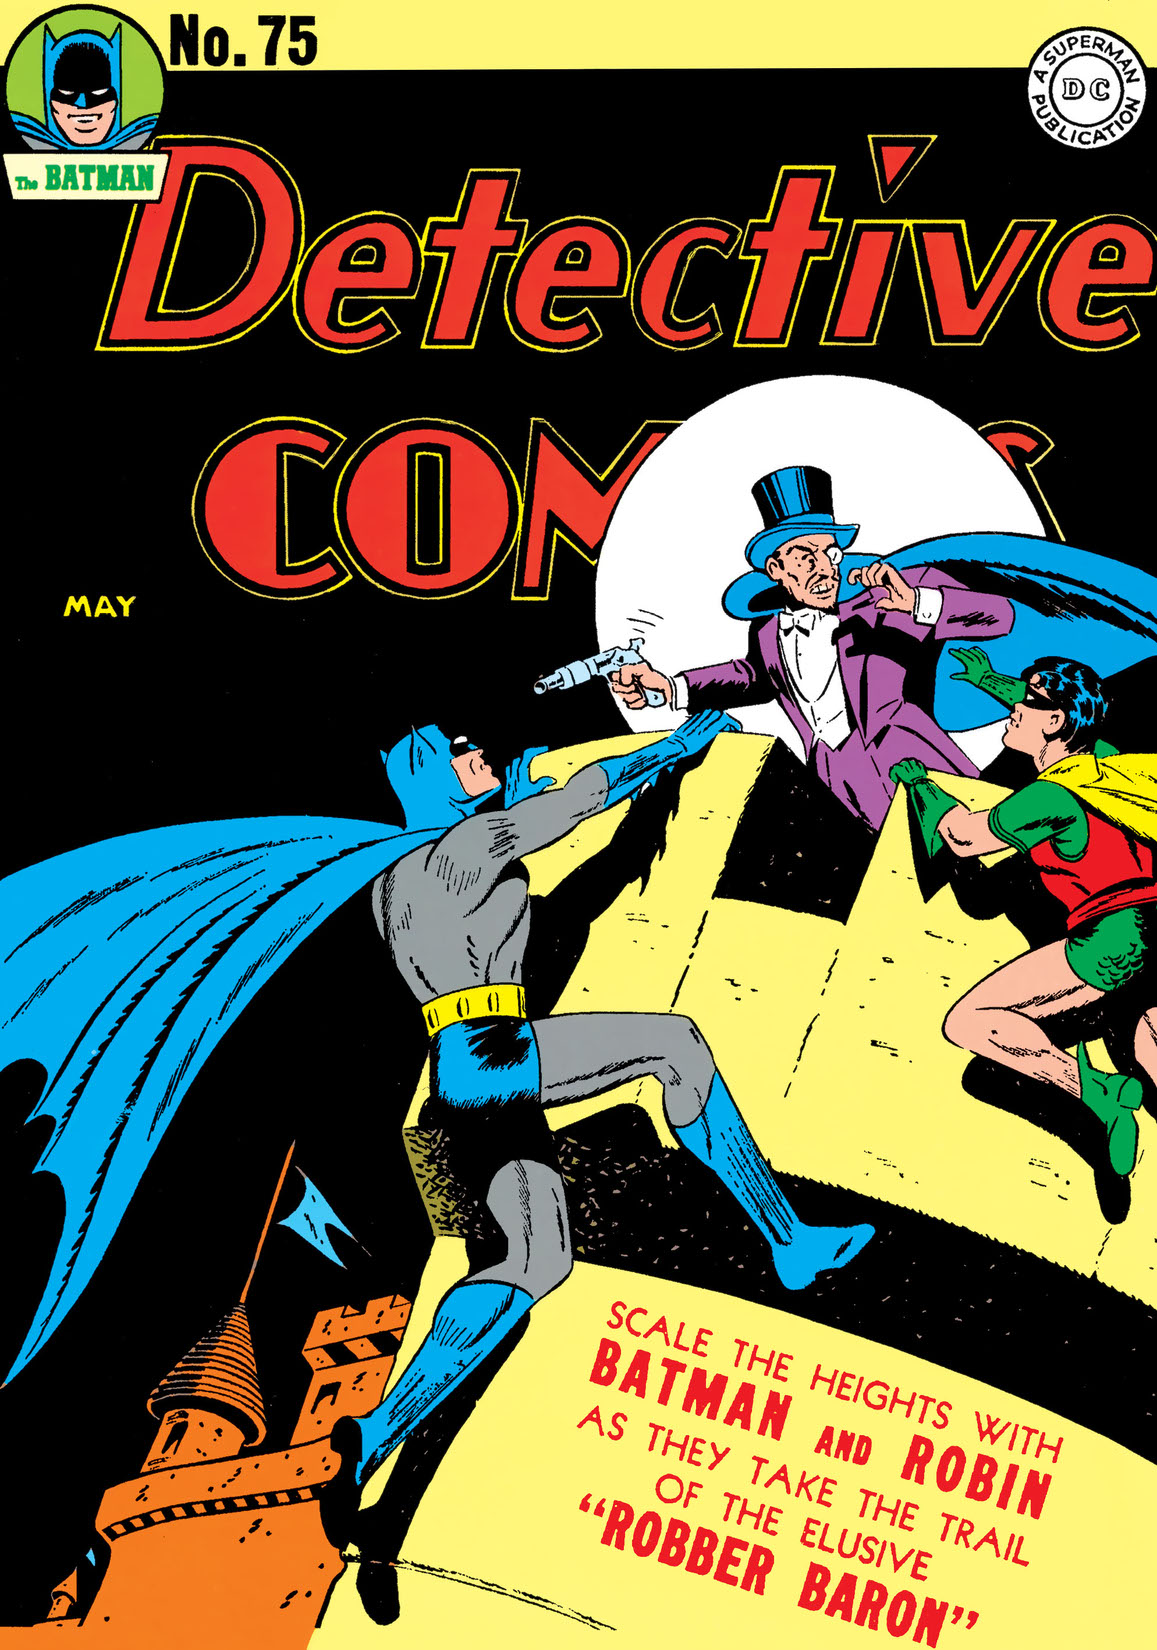 Detective Comics (1942-) #75 preview images